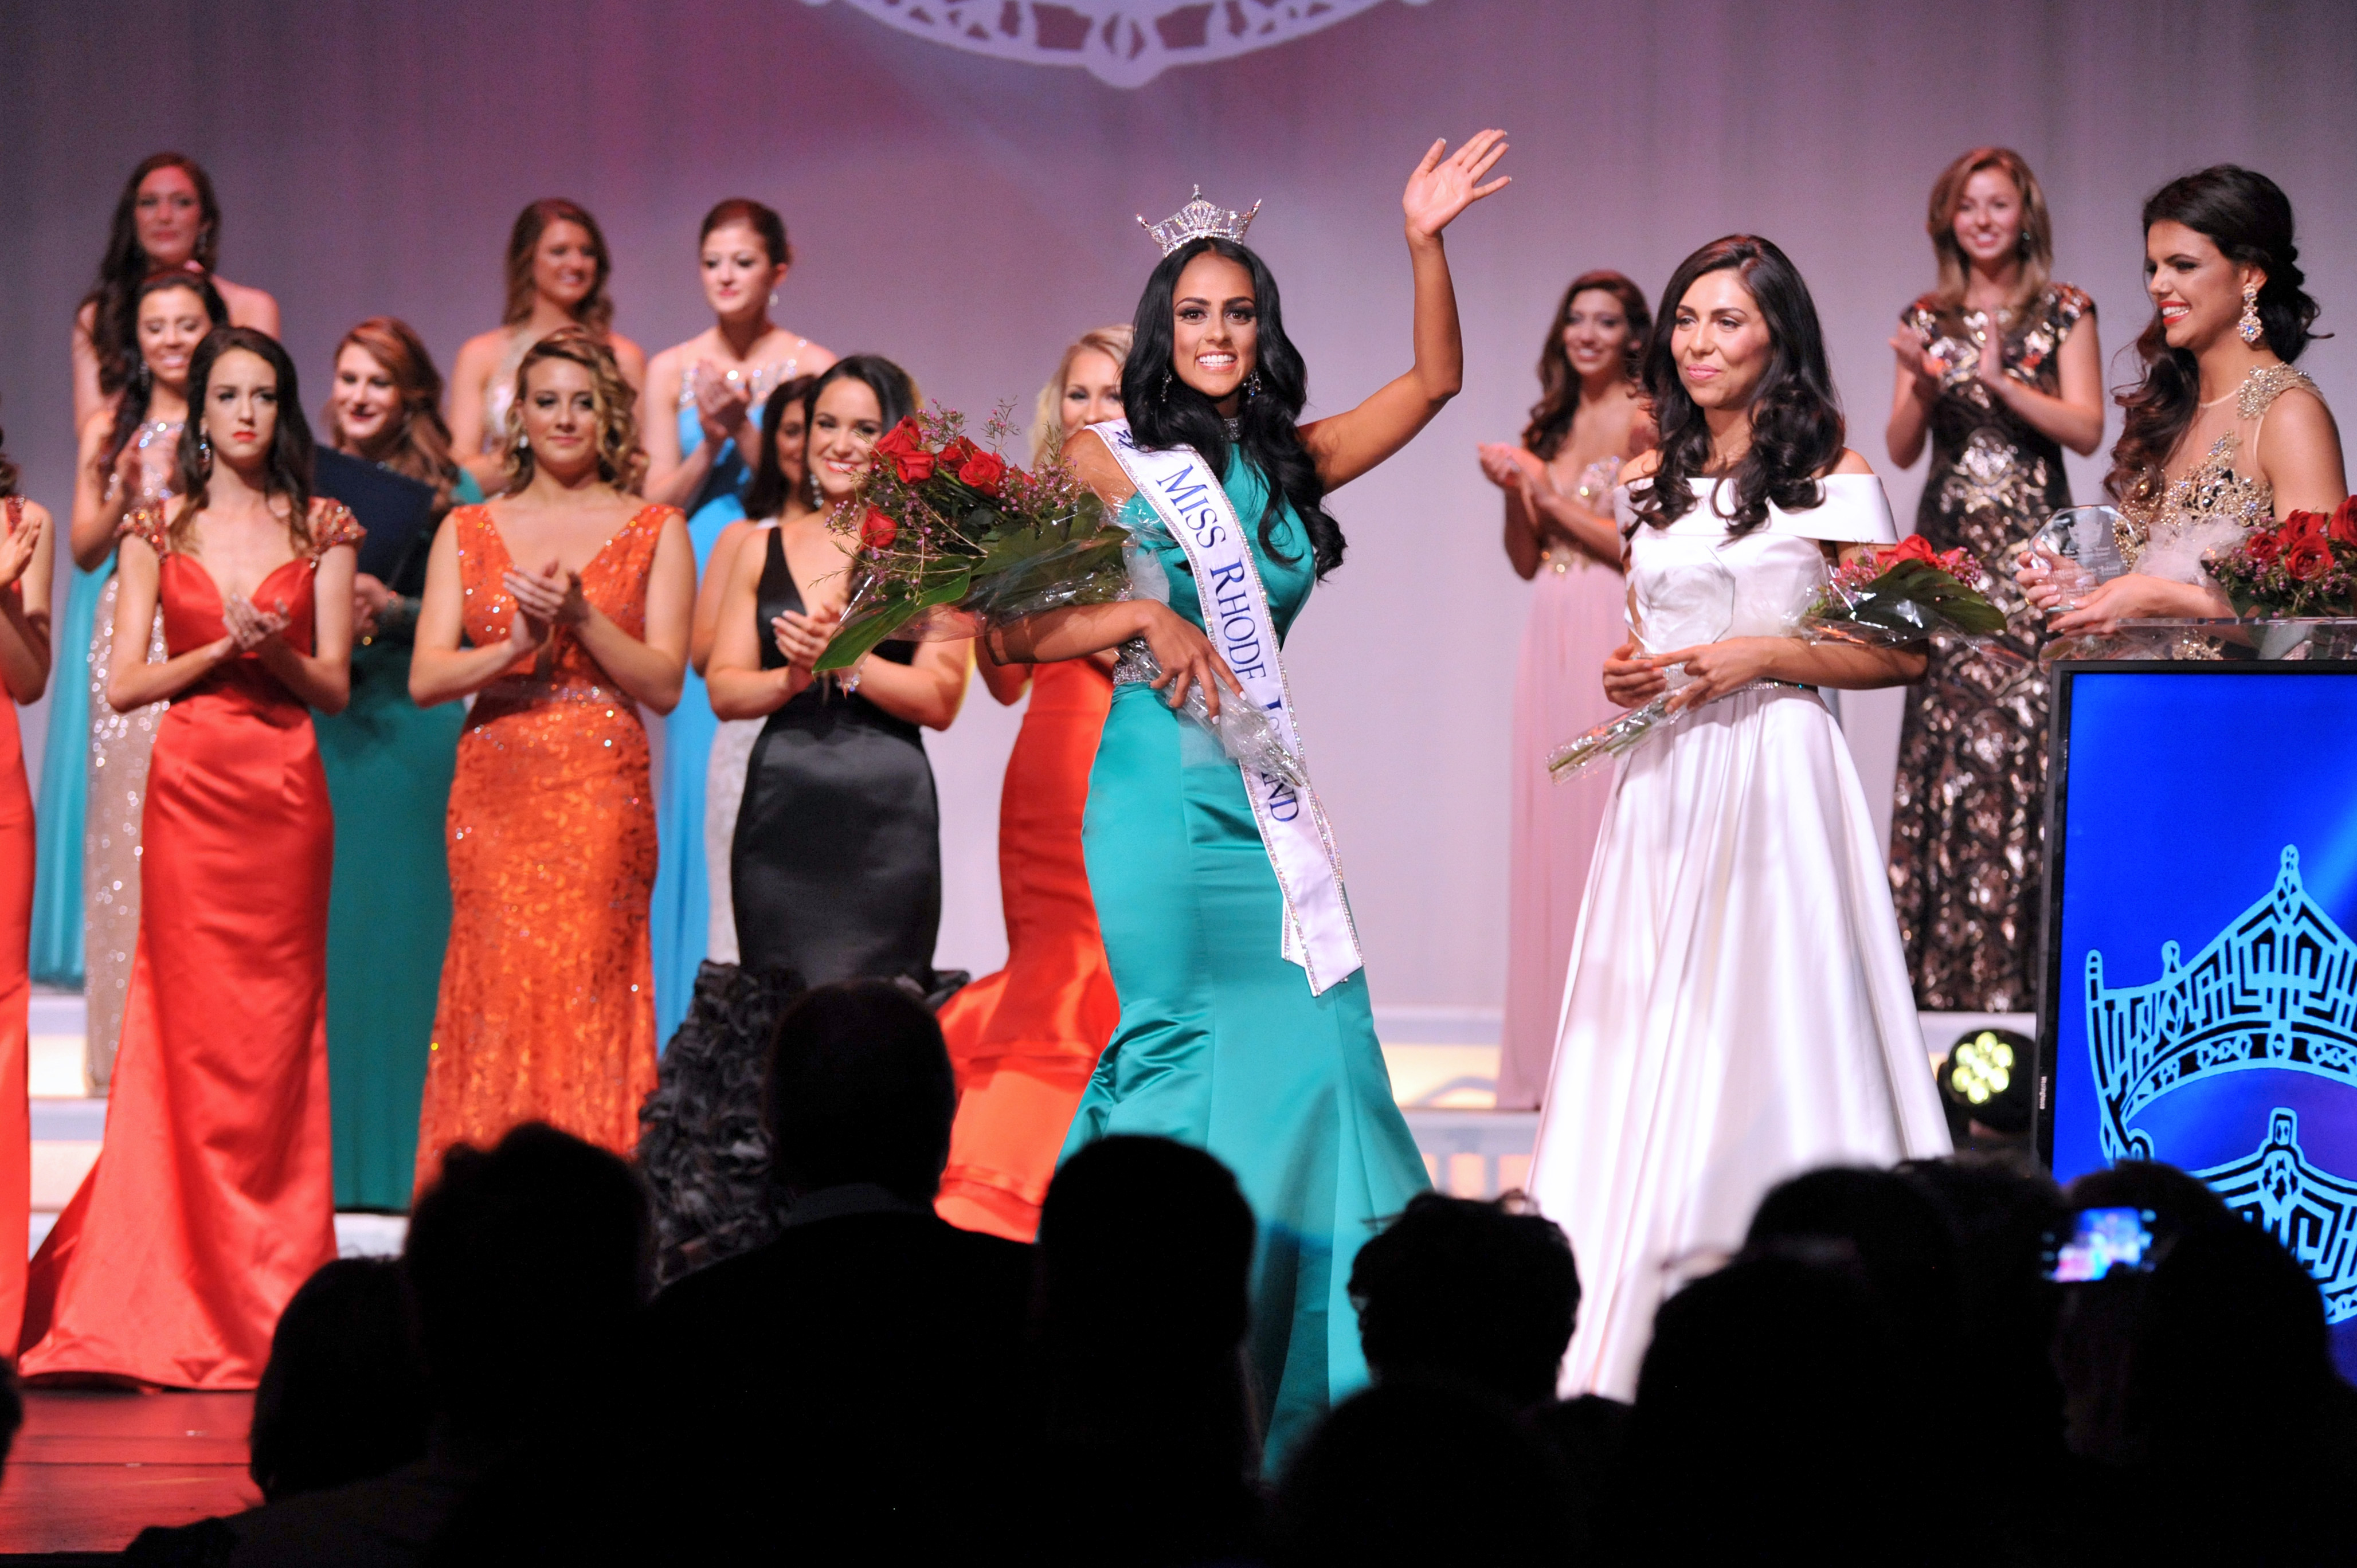 PHOTOS: Miss Rhode Island 2016 crowned in Newport